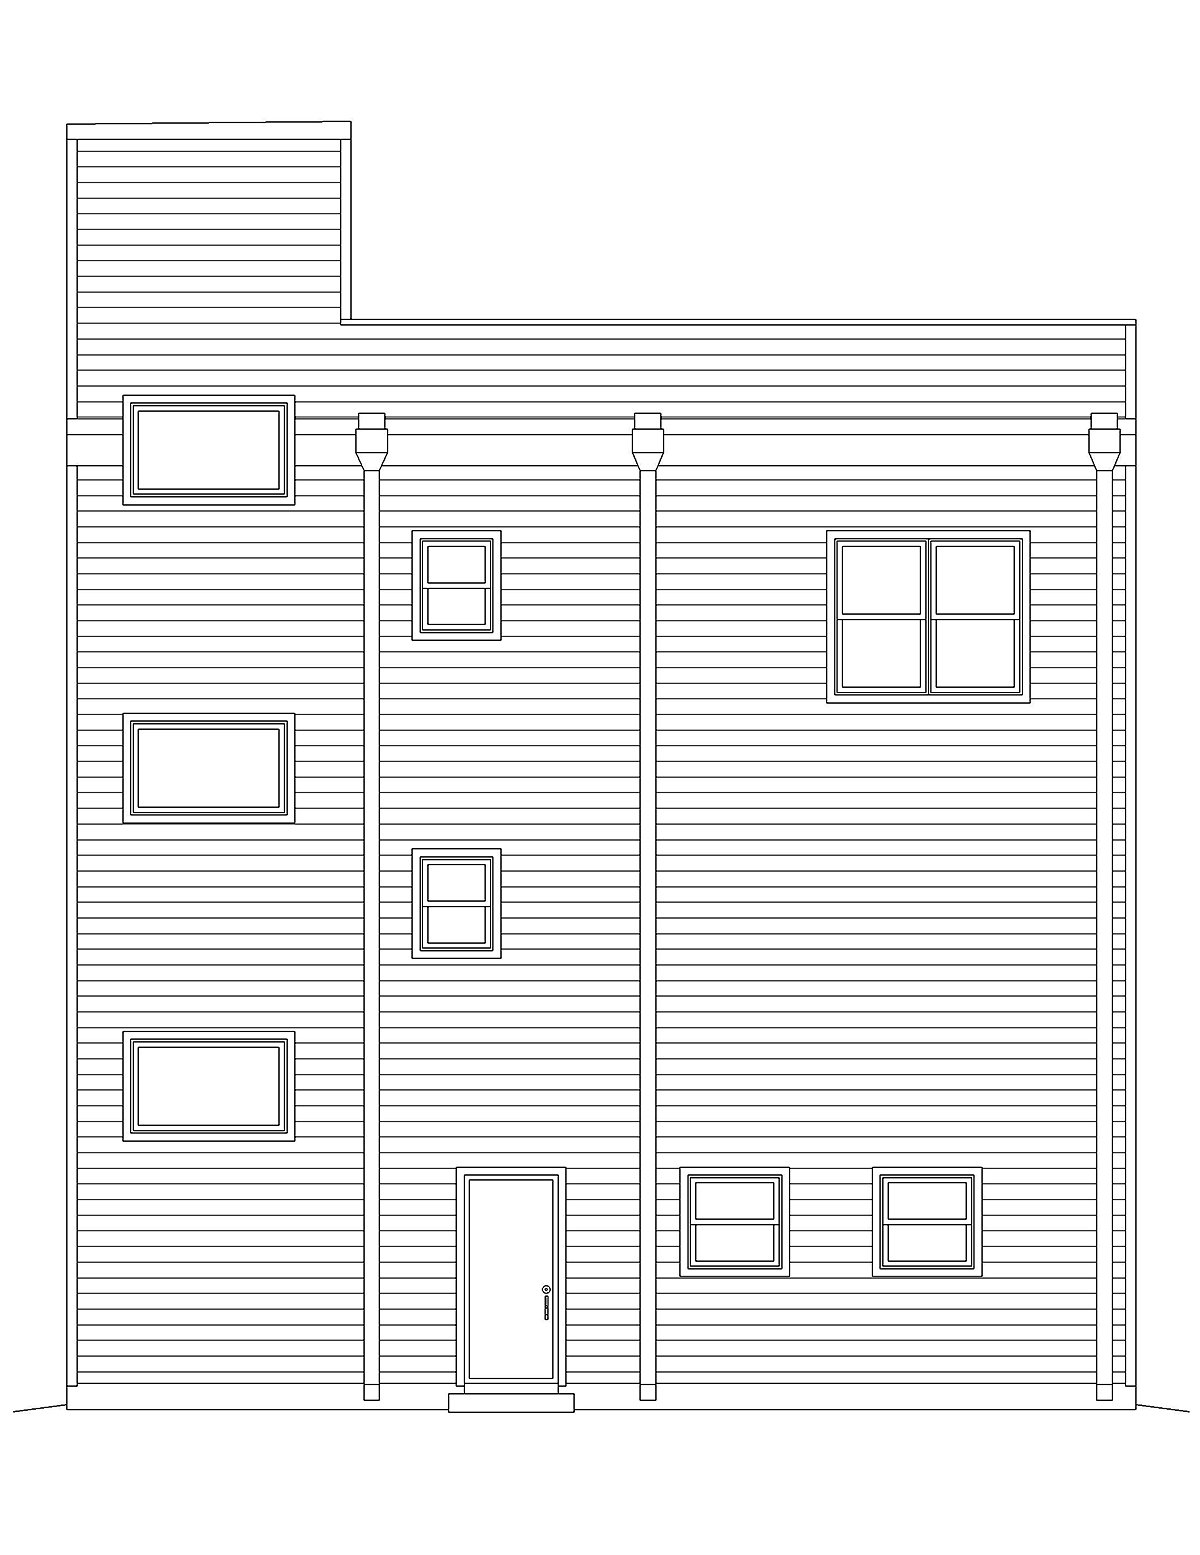 House Plan 81711 Rear Elevation